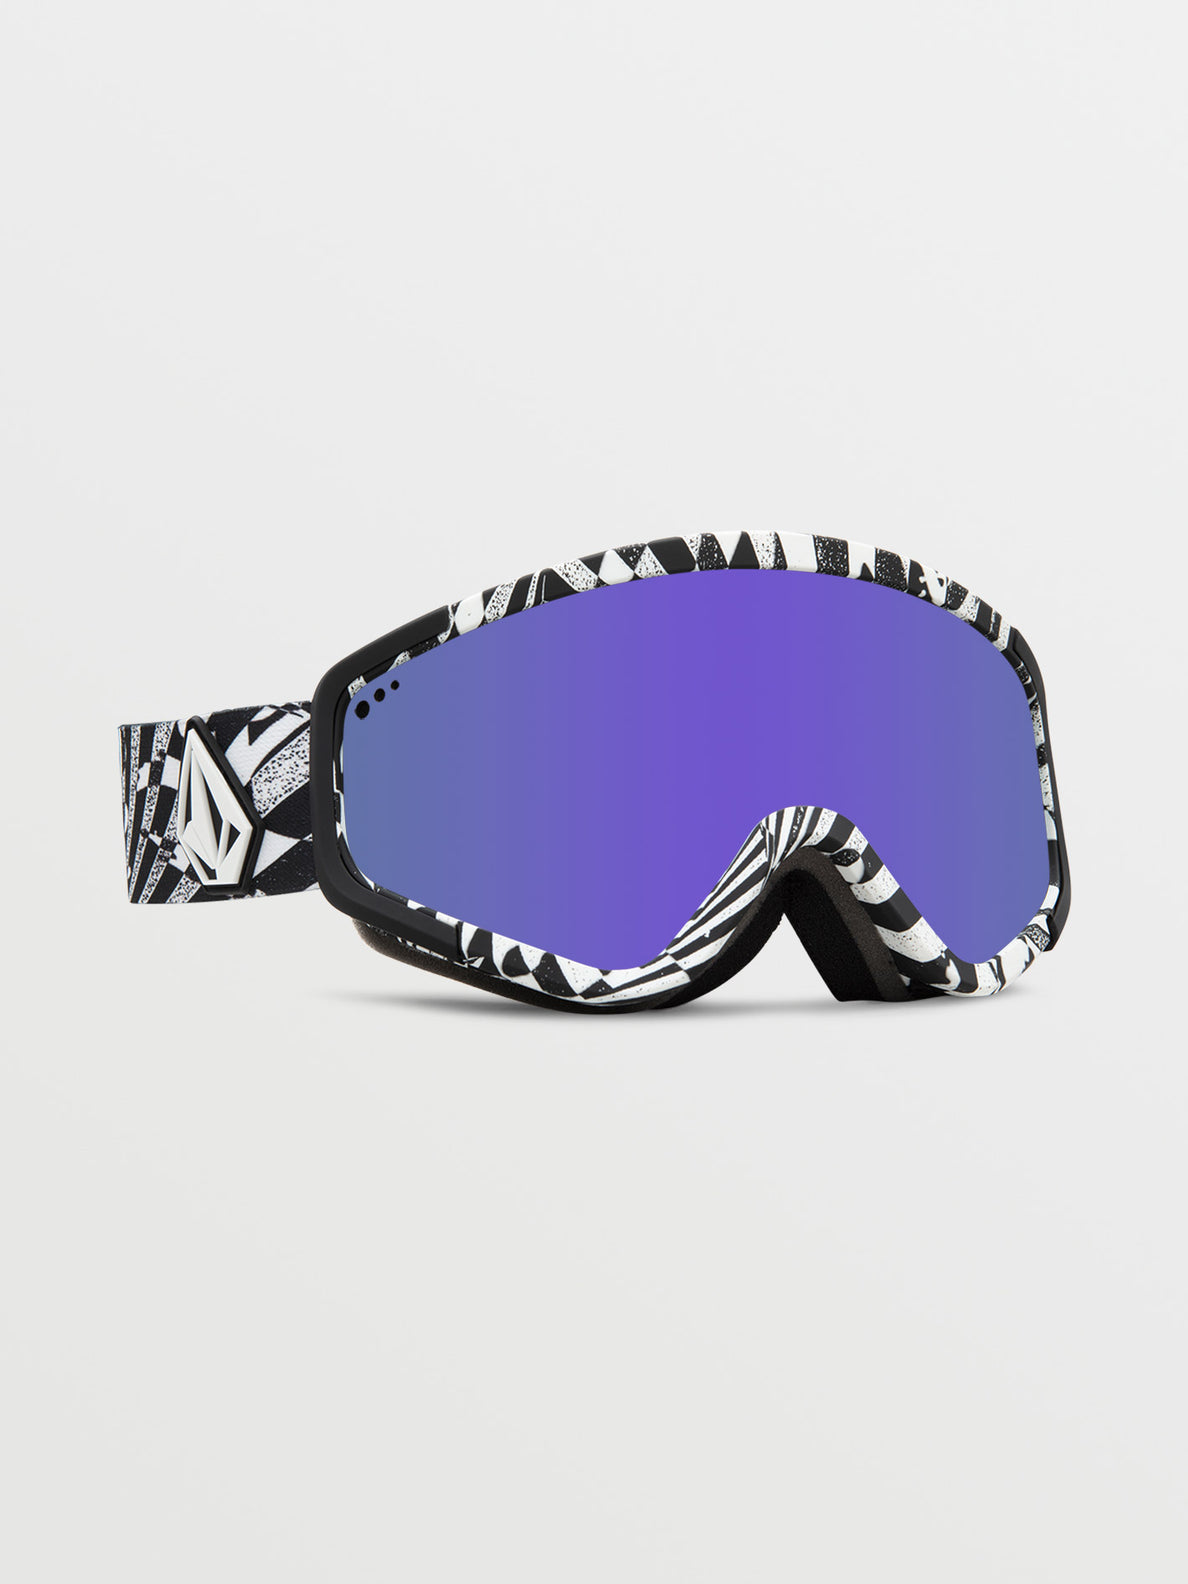 Attunga Goggle - Op Art / Purple Chrome +BL